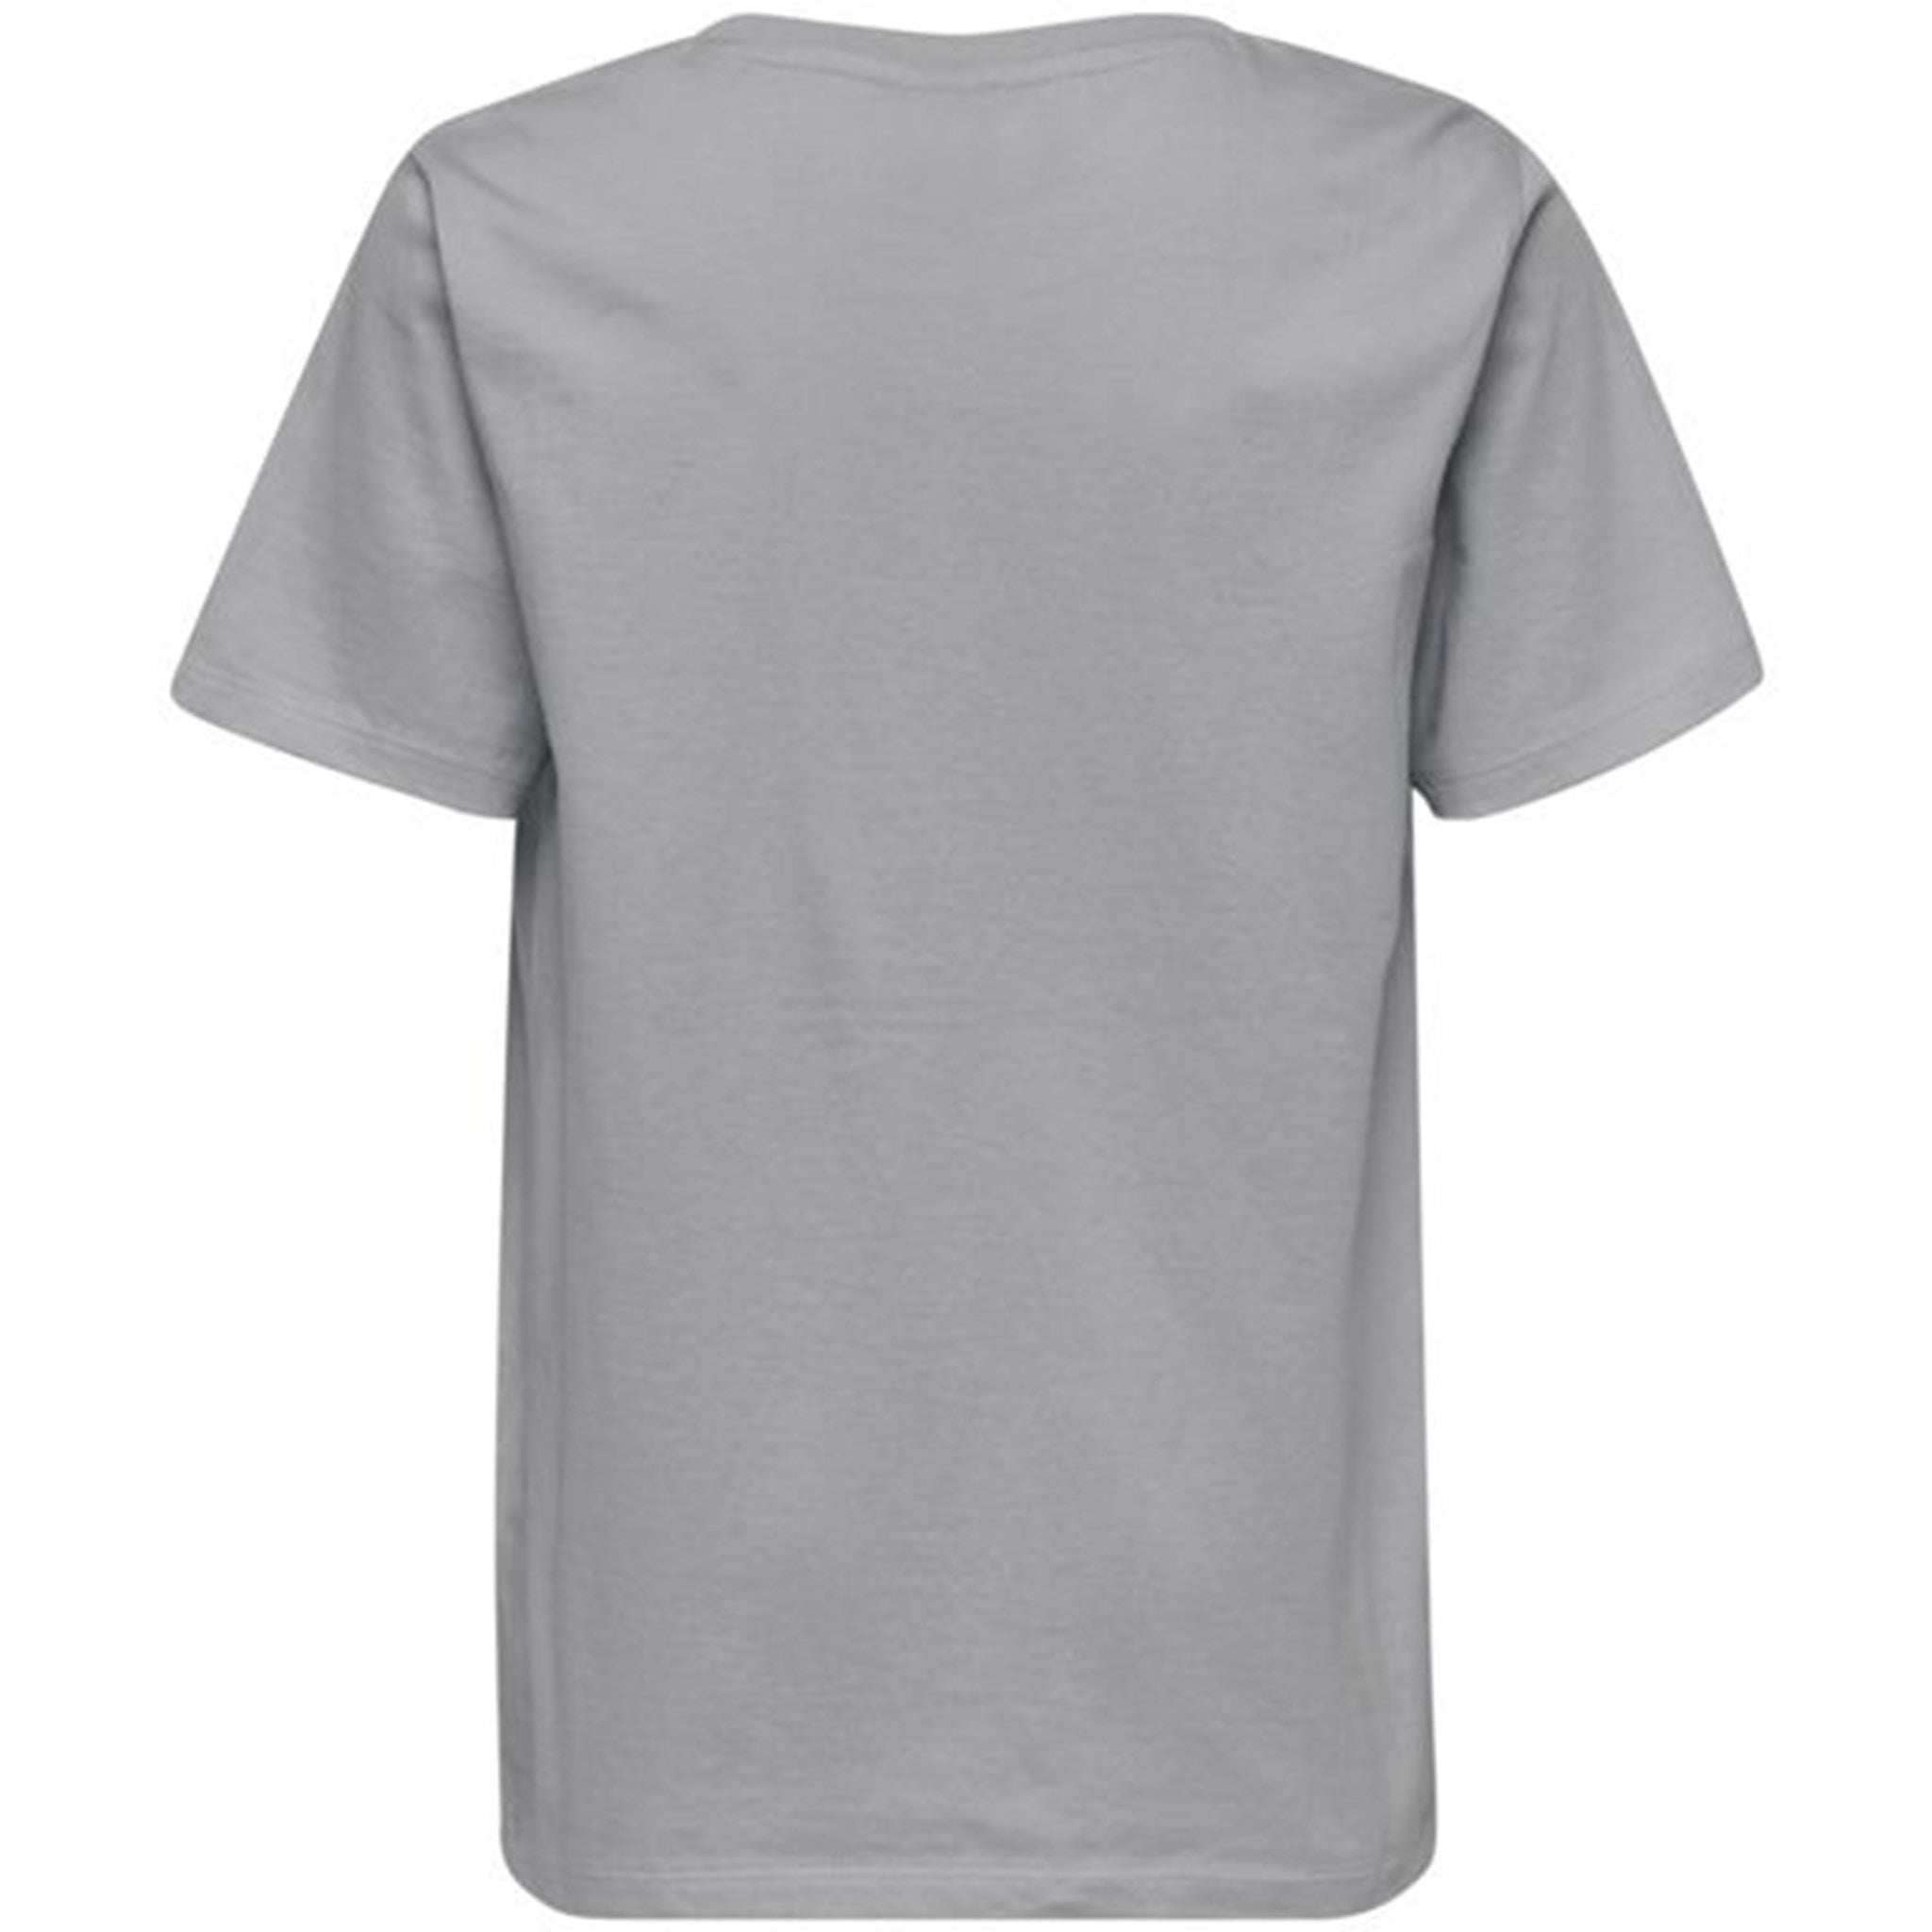 Hummel Grey Melange Tres S/S T-Shirt 2